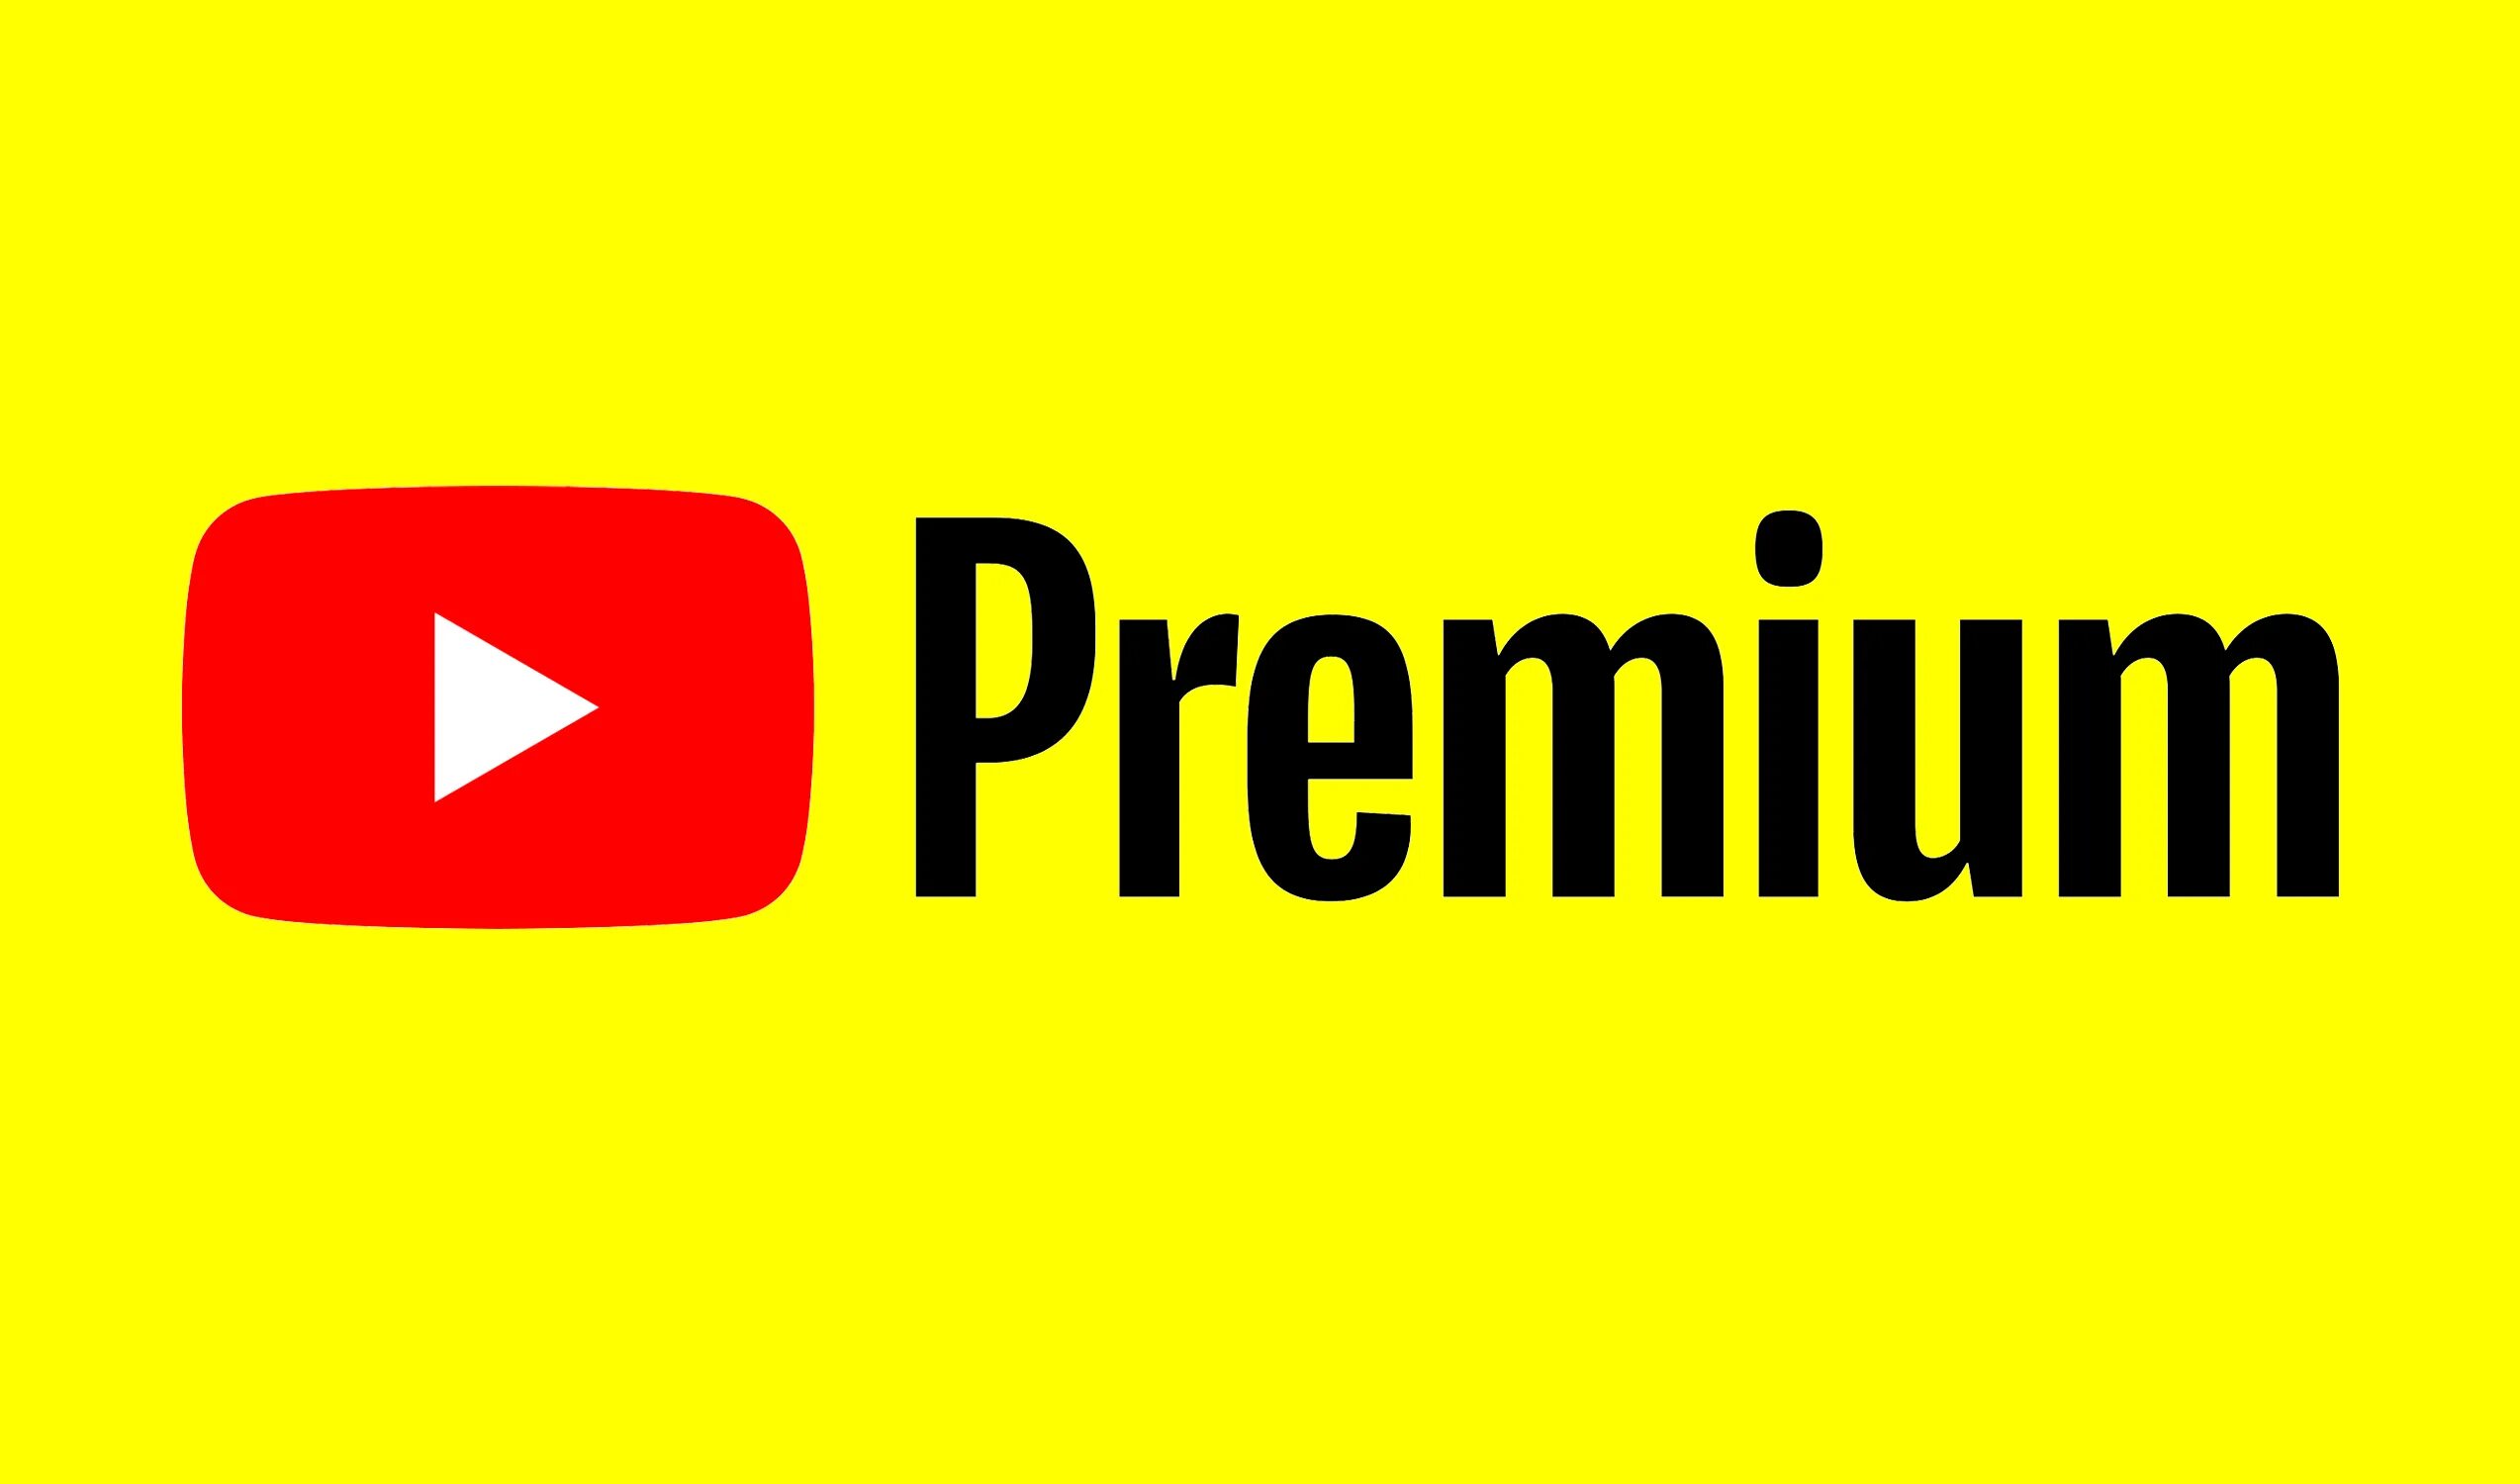 Https www youtube com какая. Youtube Premium. Ютуб премиум. Логотип ютуб. Ютуб премиум логотип.